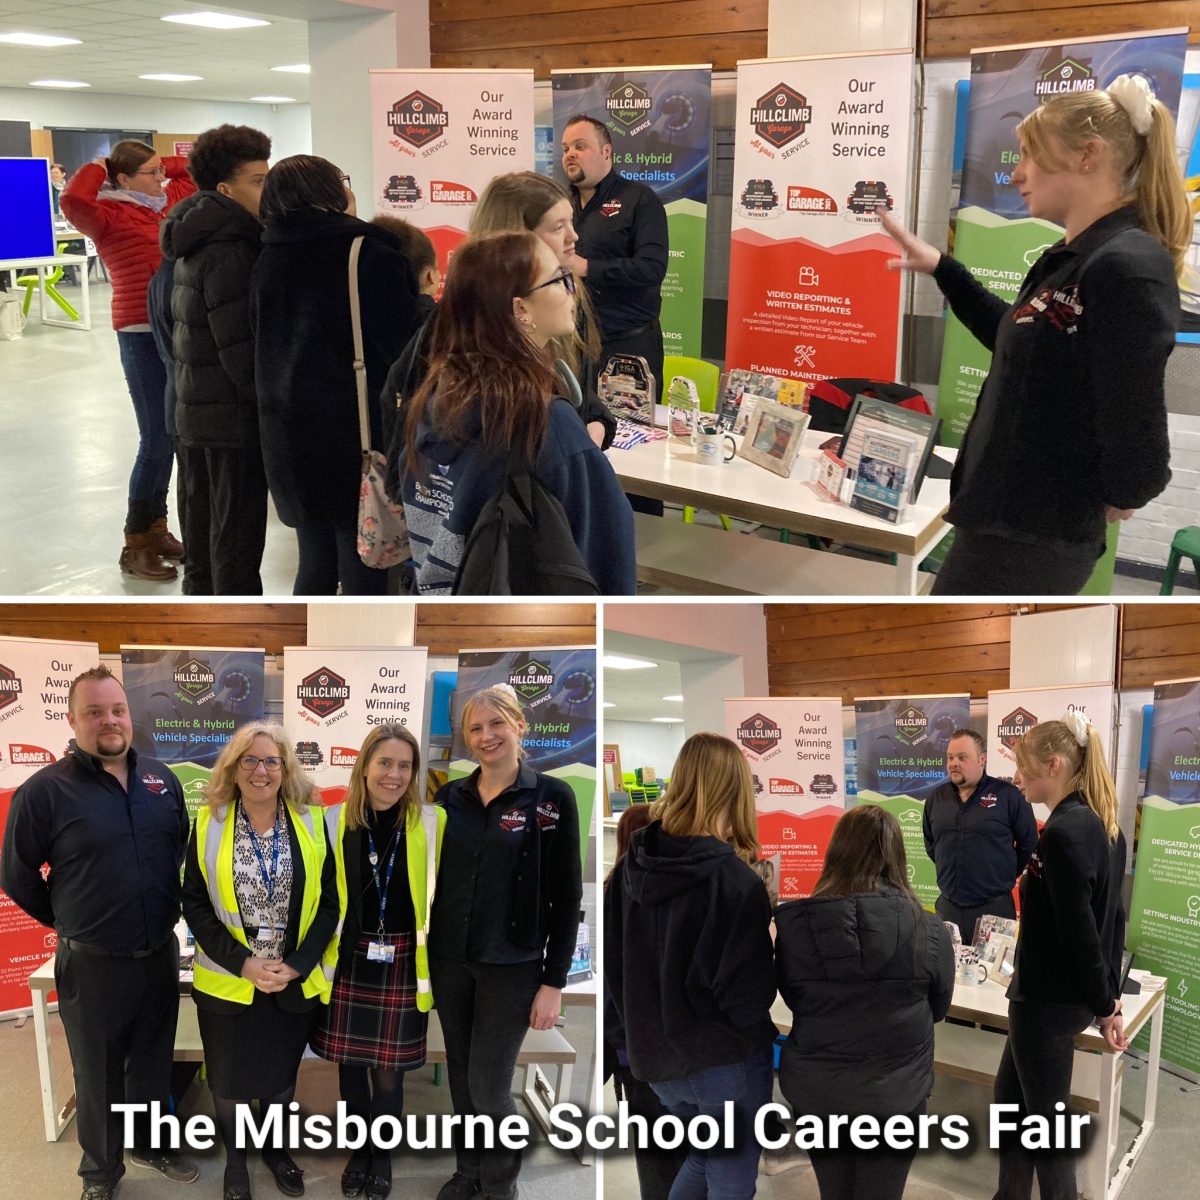 The Misbourne School Careers Fair